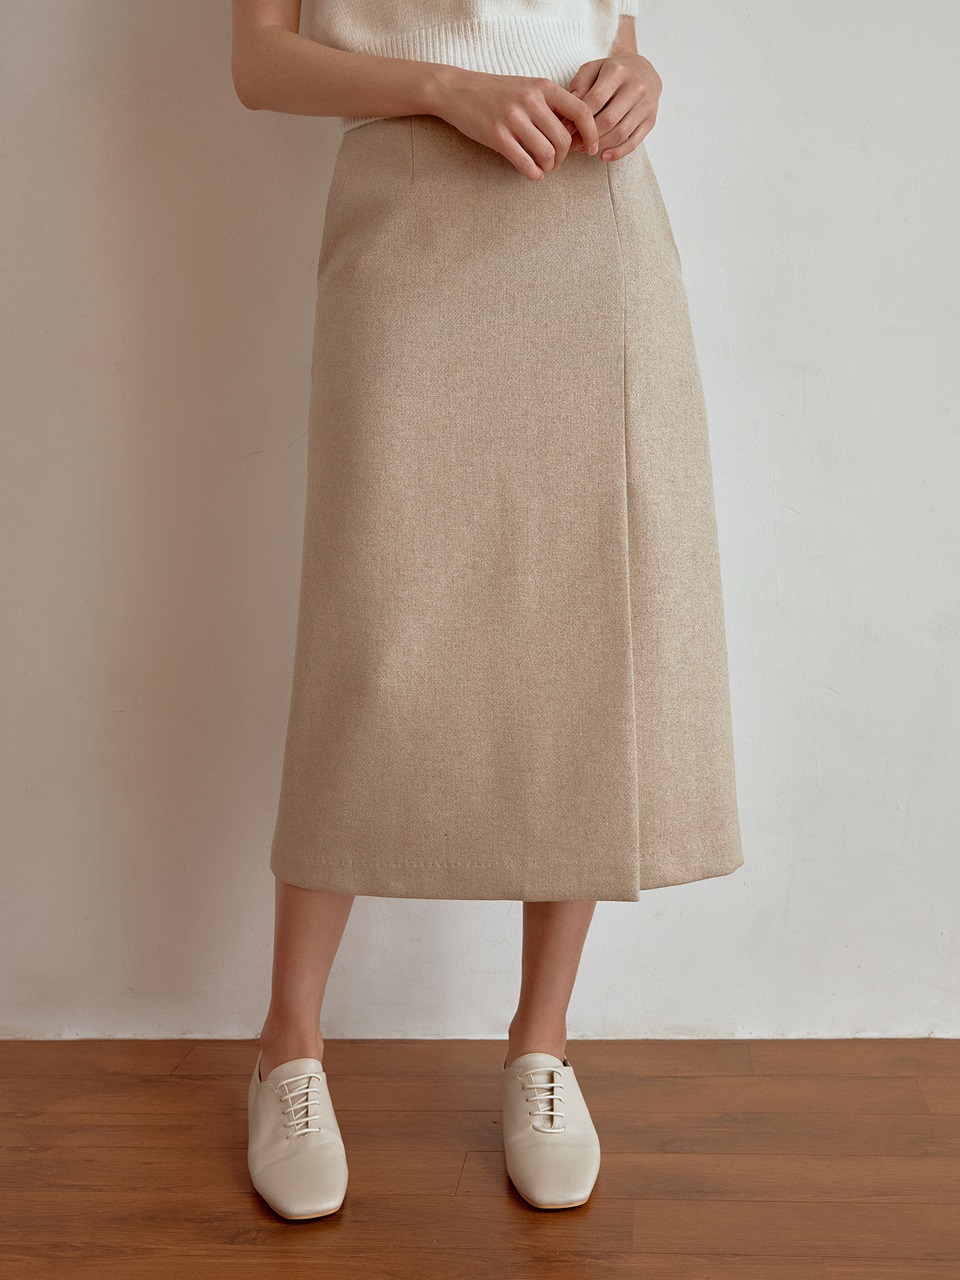 Pond wool skirt (beige)